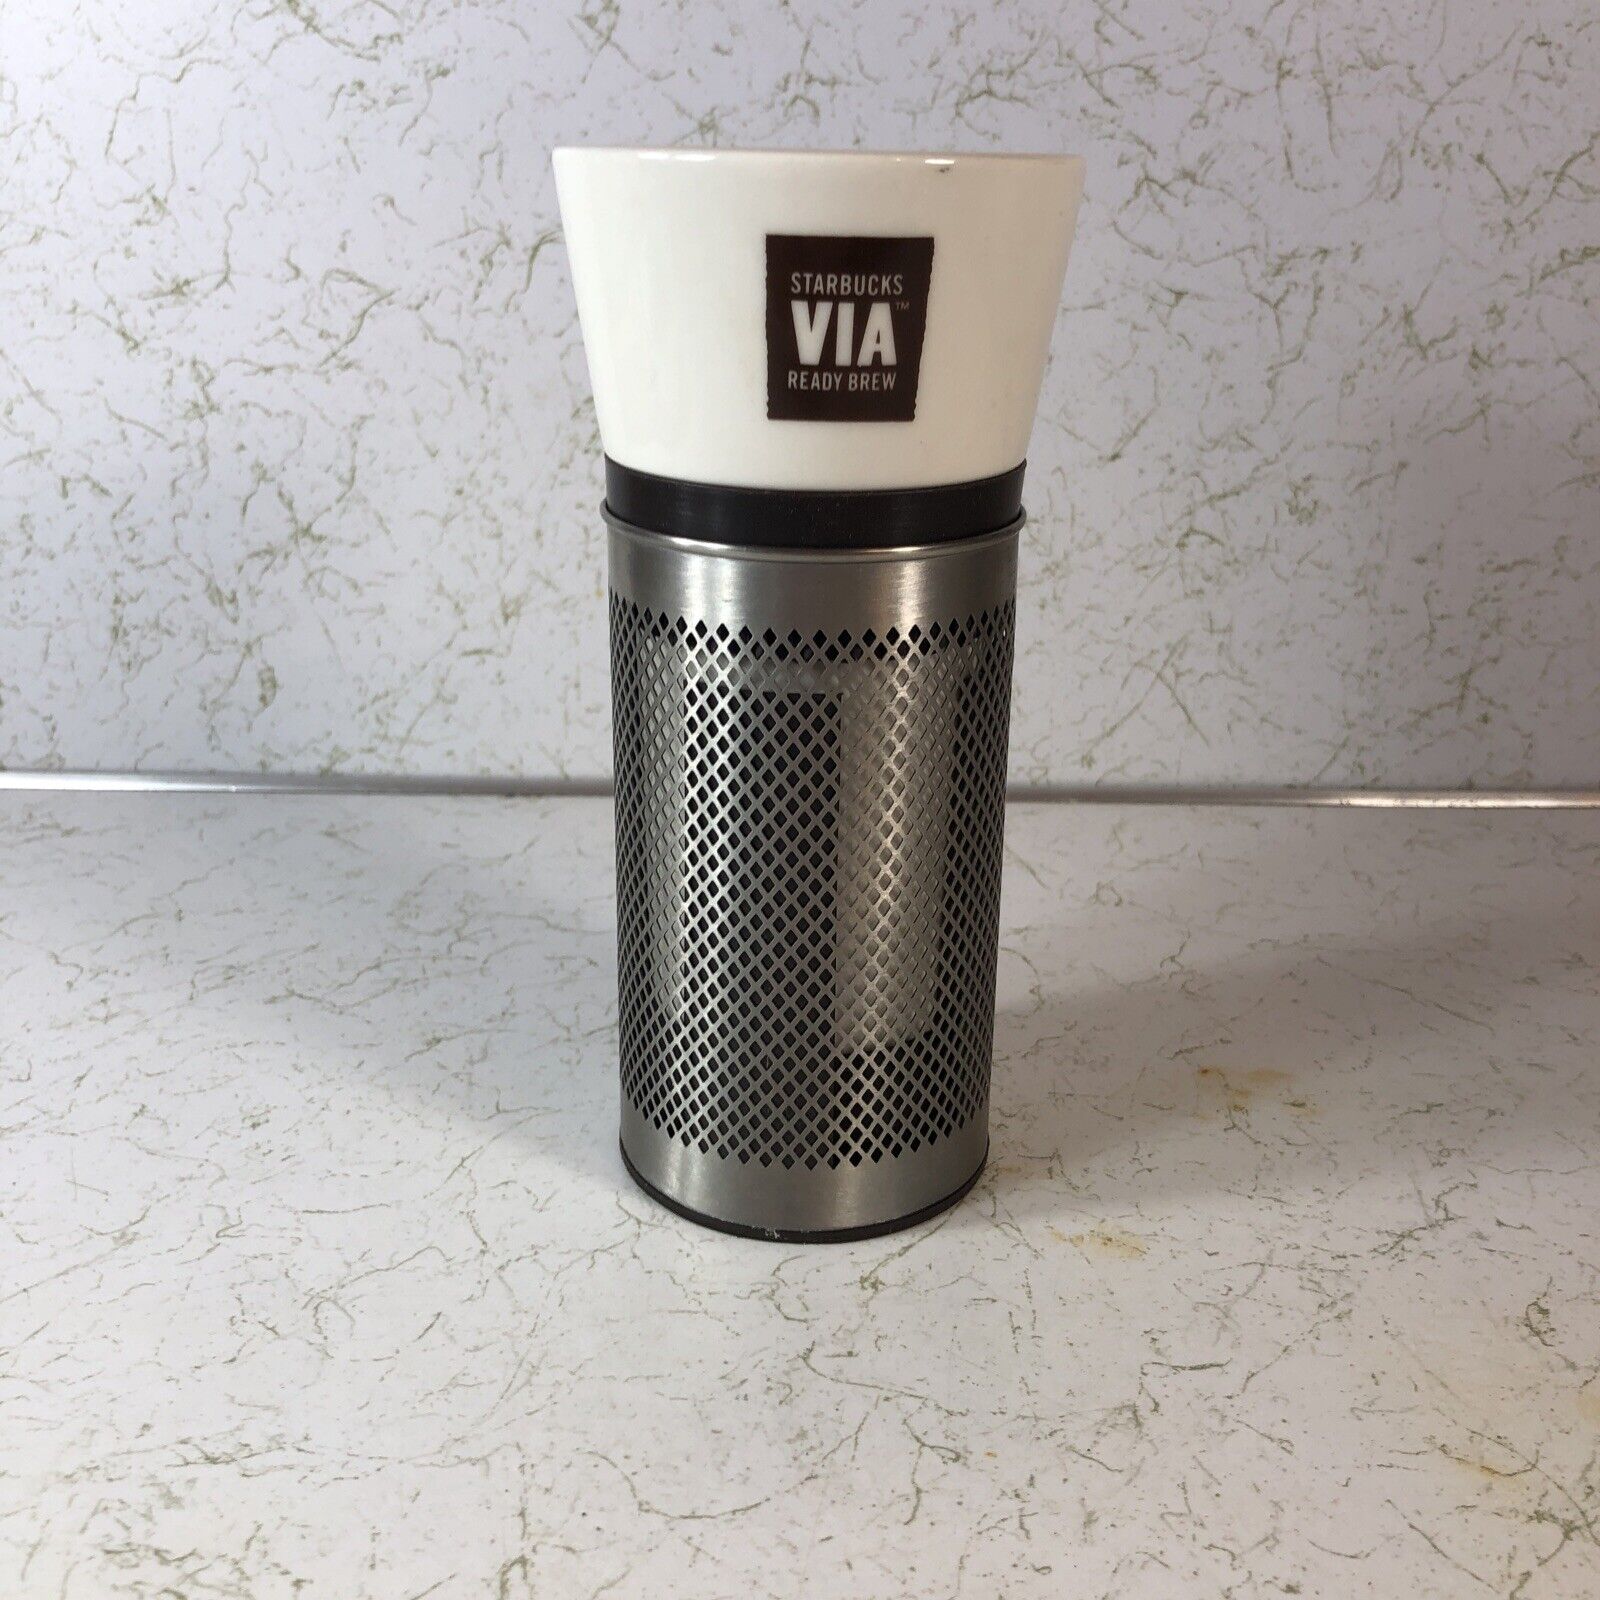 Starbucks Via Ready Brew Coffee Replacement Travel Tumbler Mug Cup 16 oz